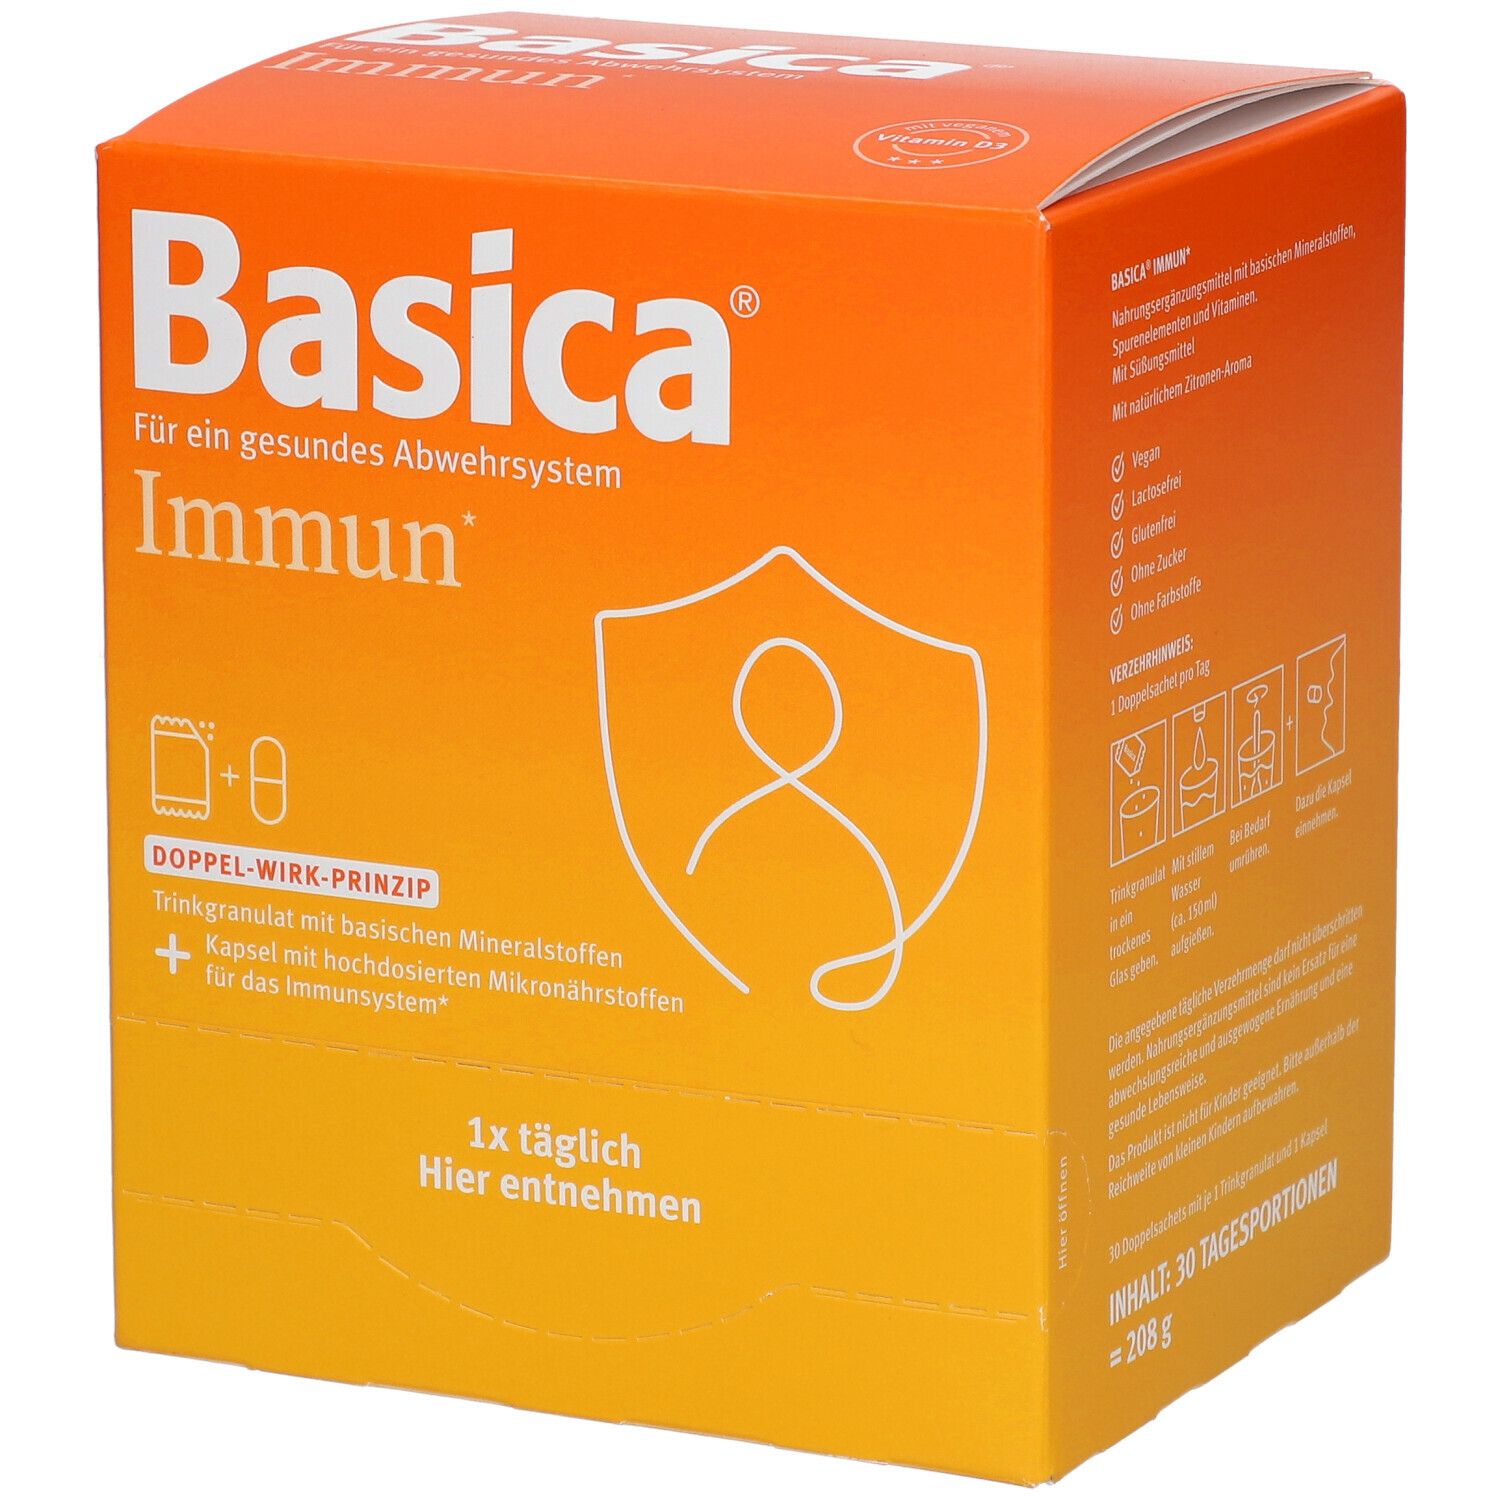 Basica® immune